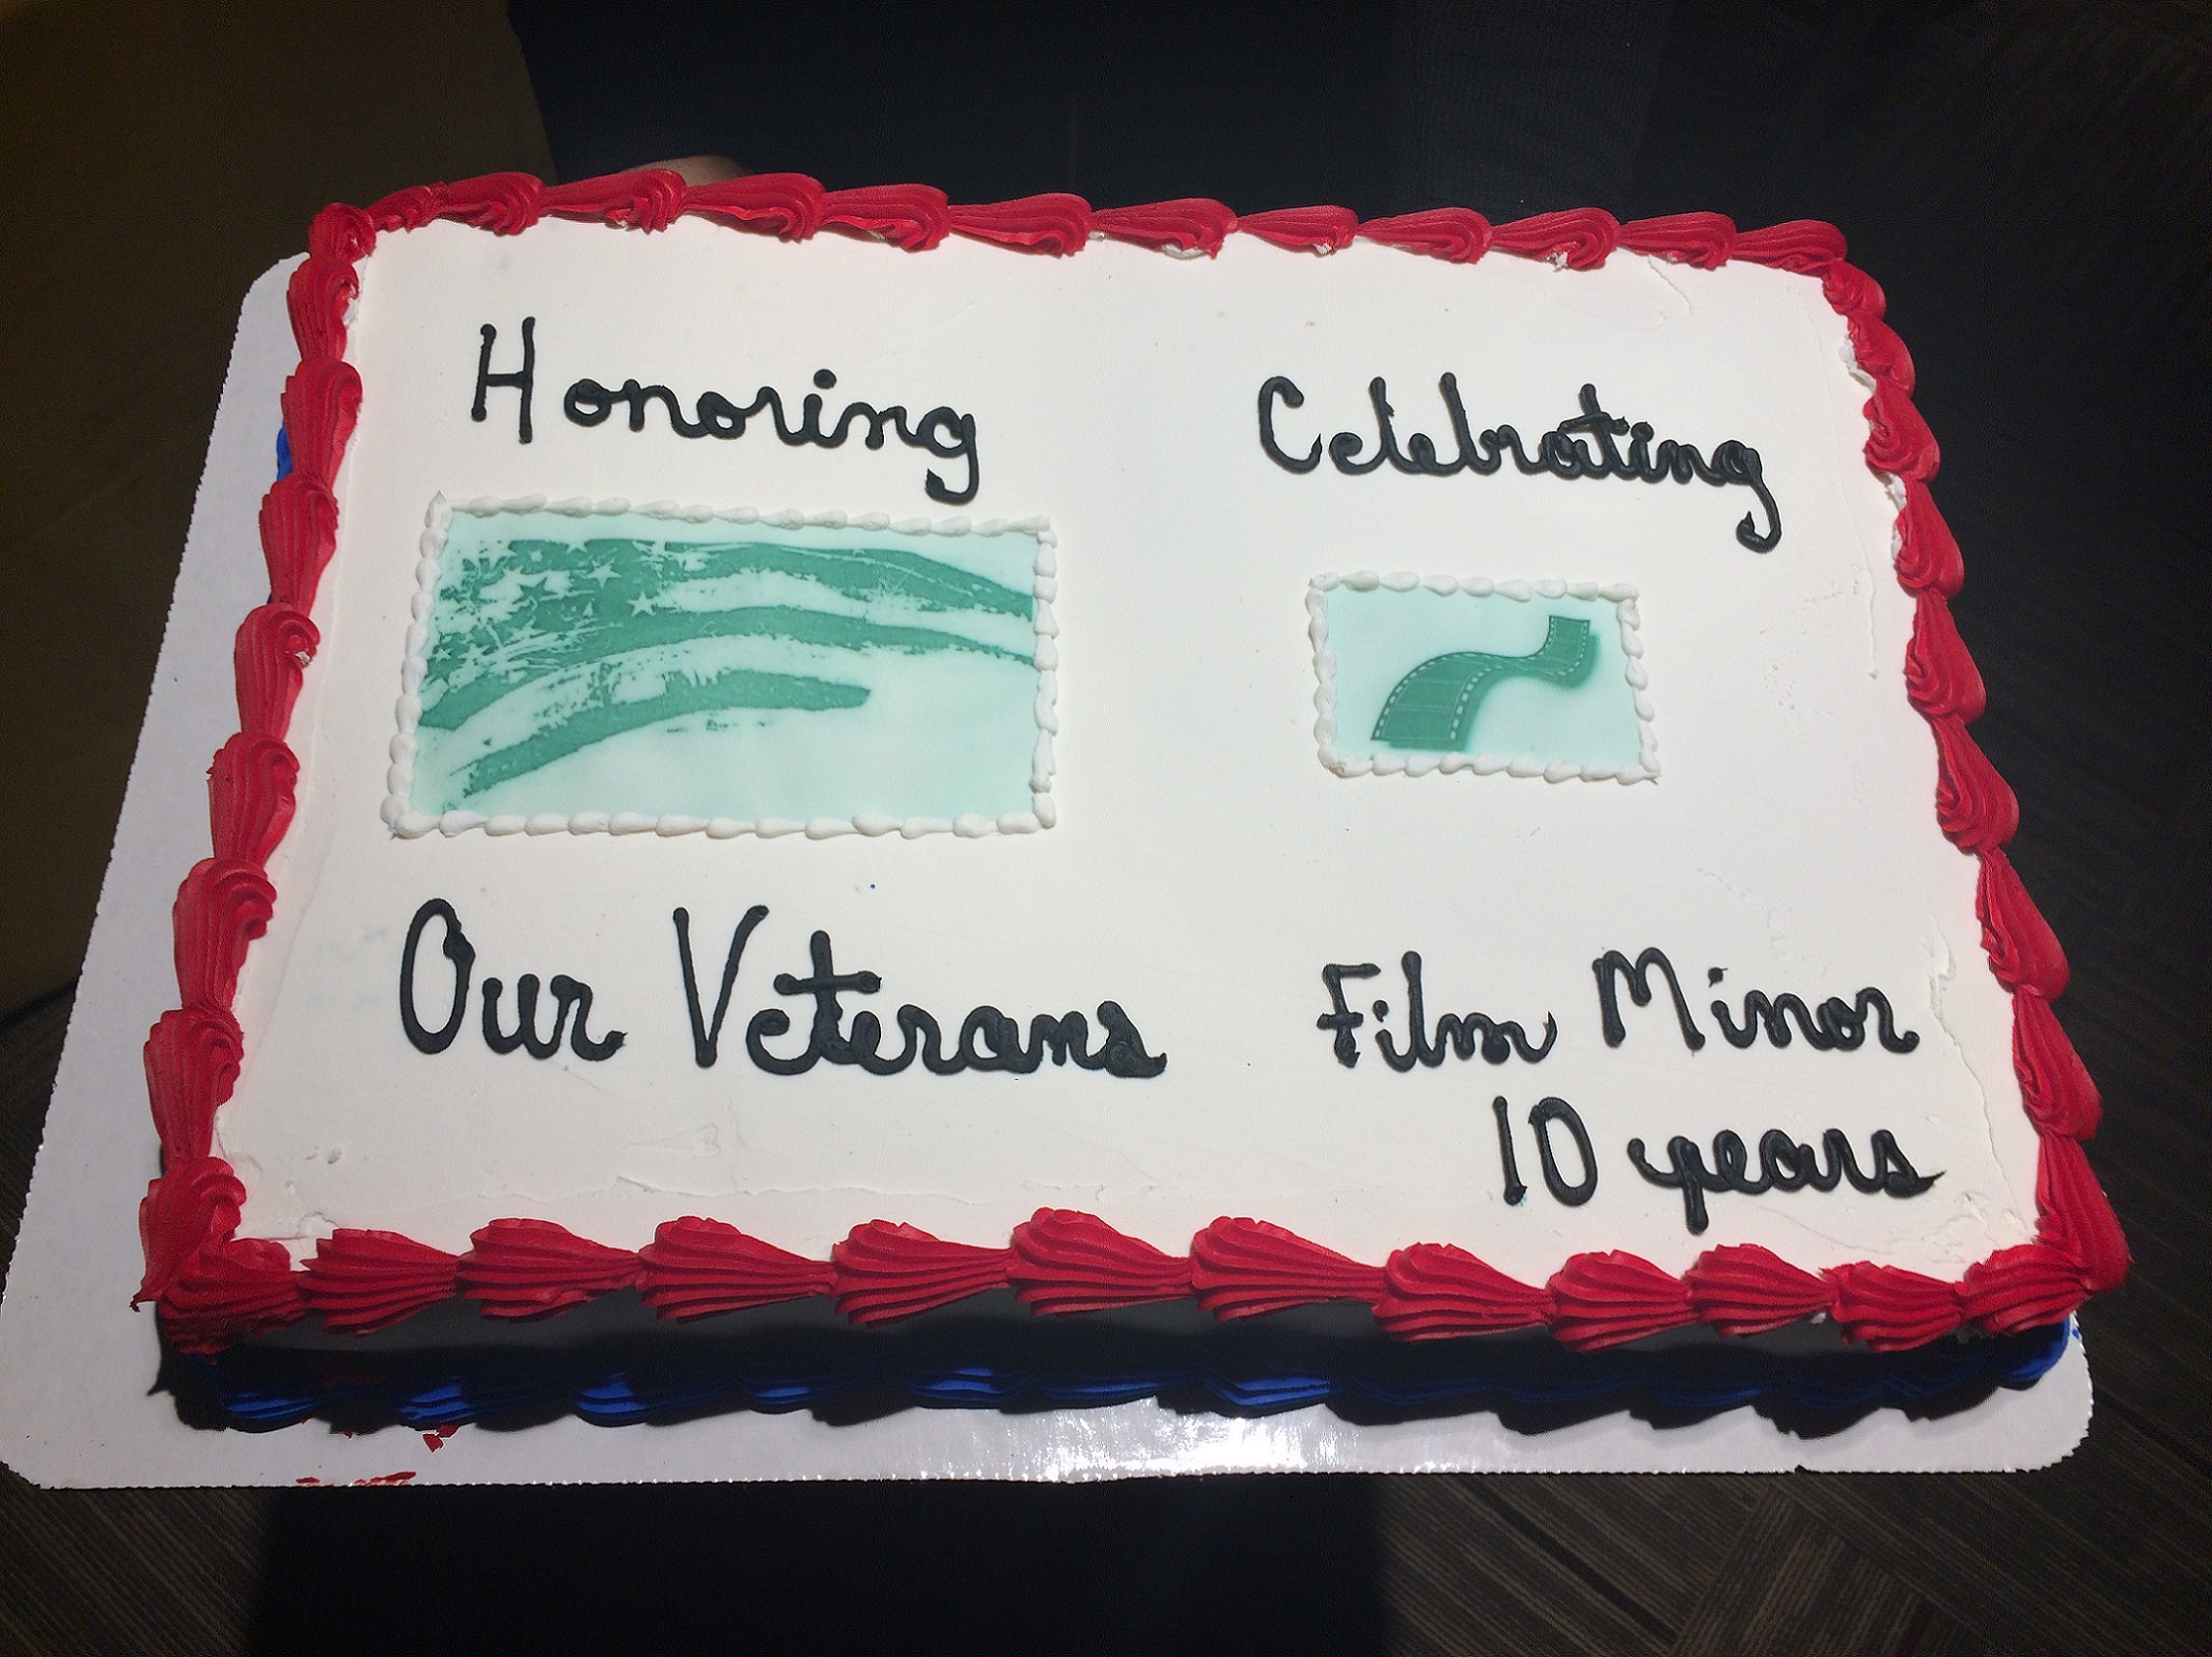 10 Year Film Event Cake